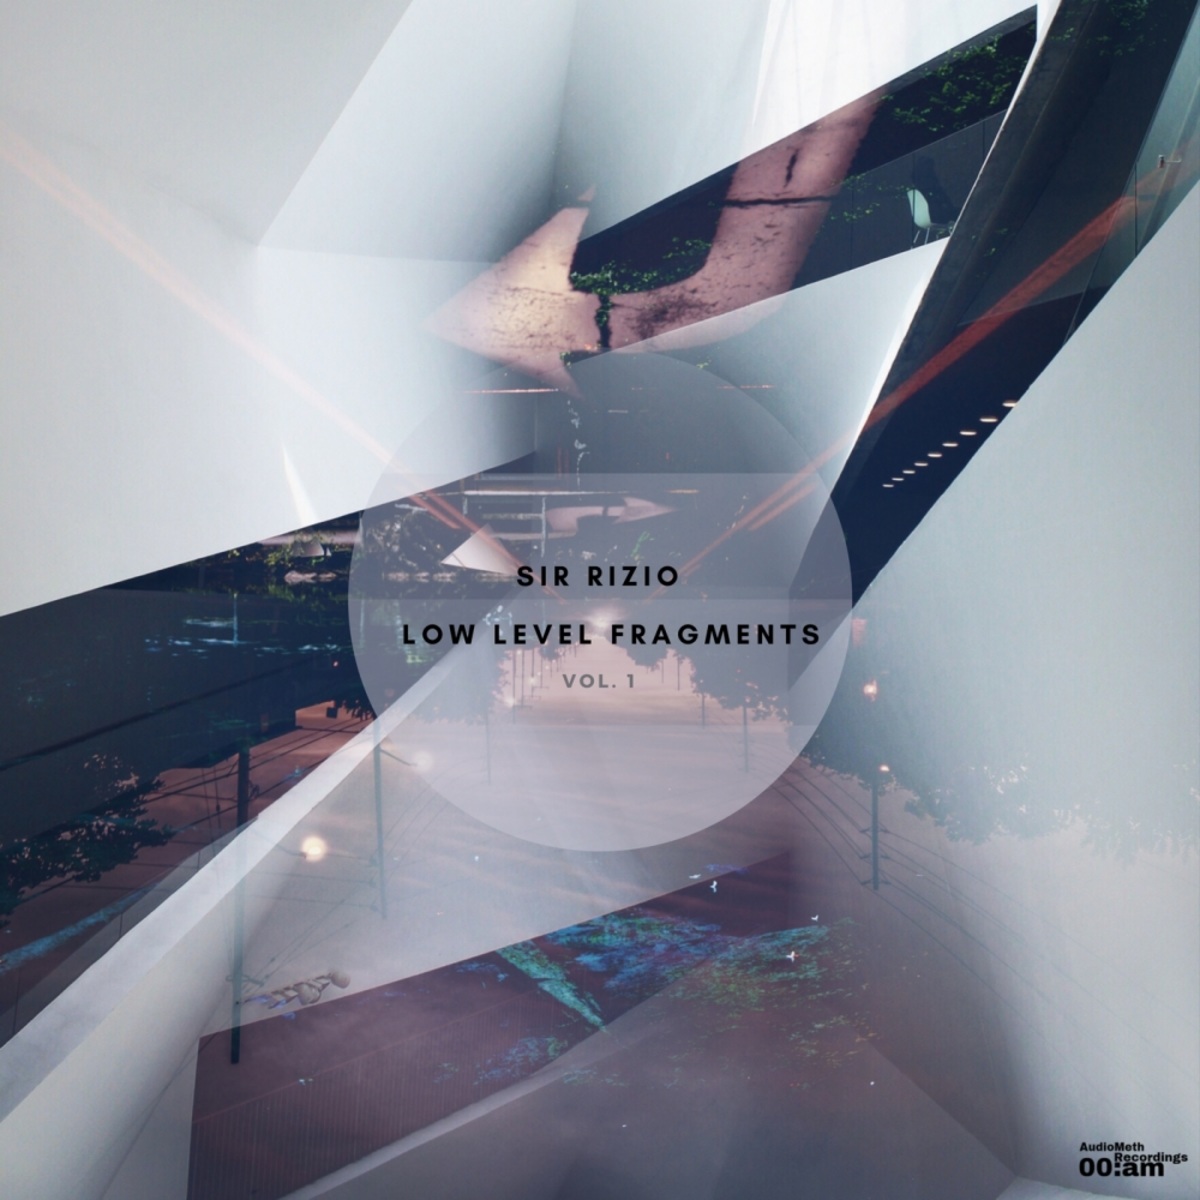 Sir Rizio - Low Level Fragments, Vol. 1 / AudioMeth Recordings